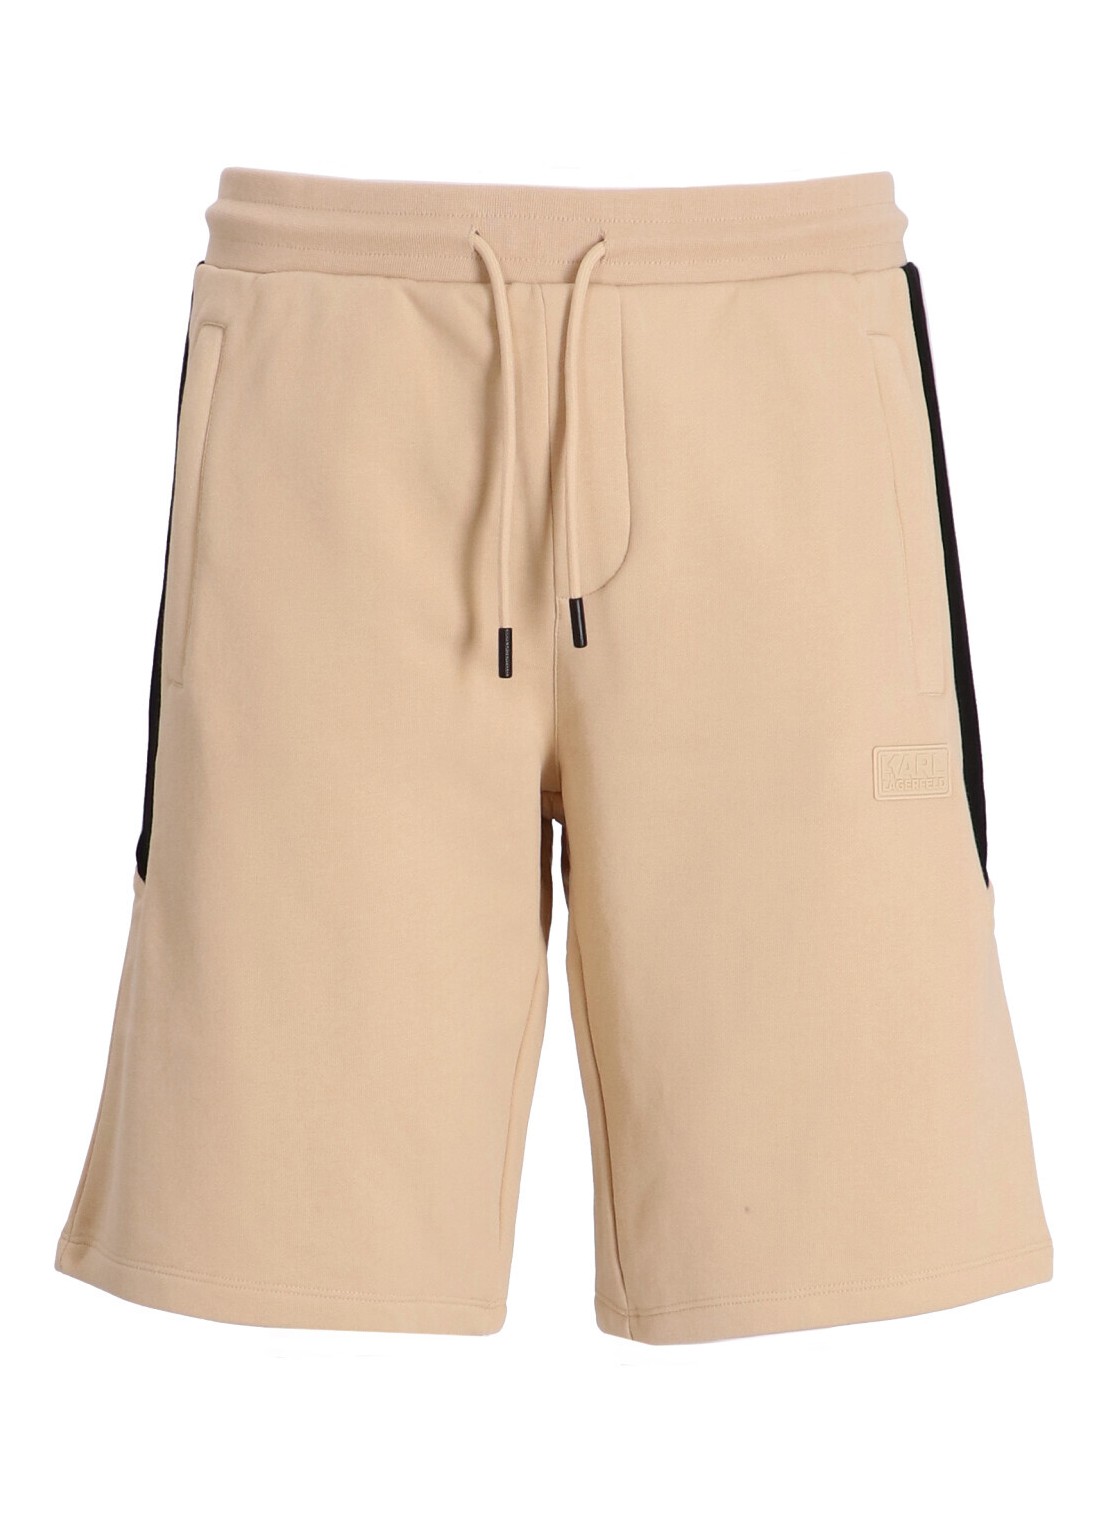 Pantalon corto karl lagerfeld short pant man sweat shorts 705414533910 400 talla L
 